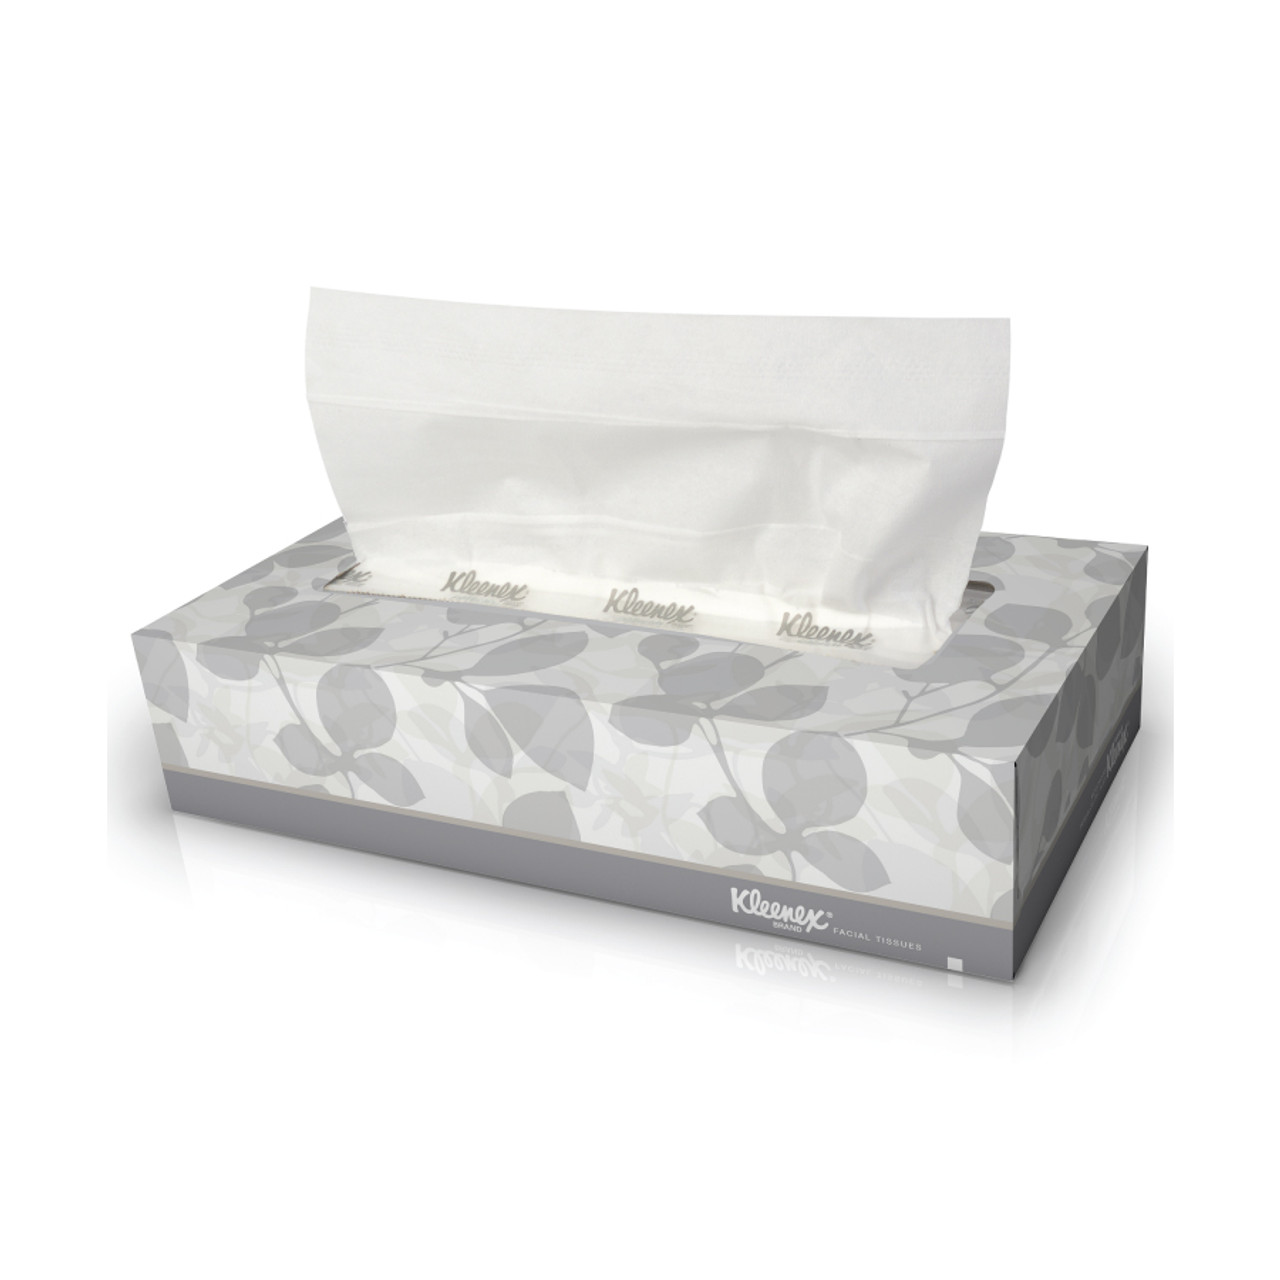 Pop Box Tissues Kleenex Tissues | Zogics